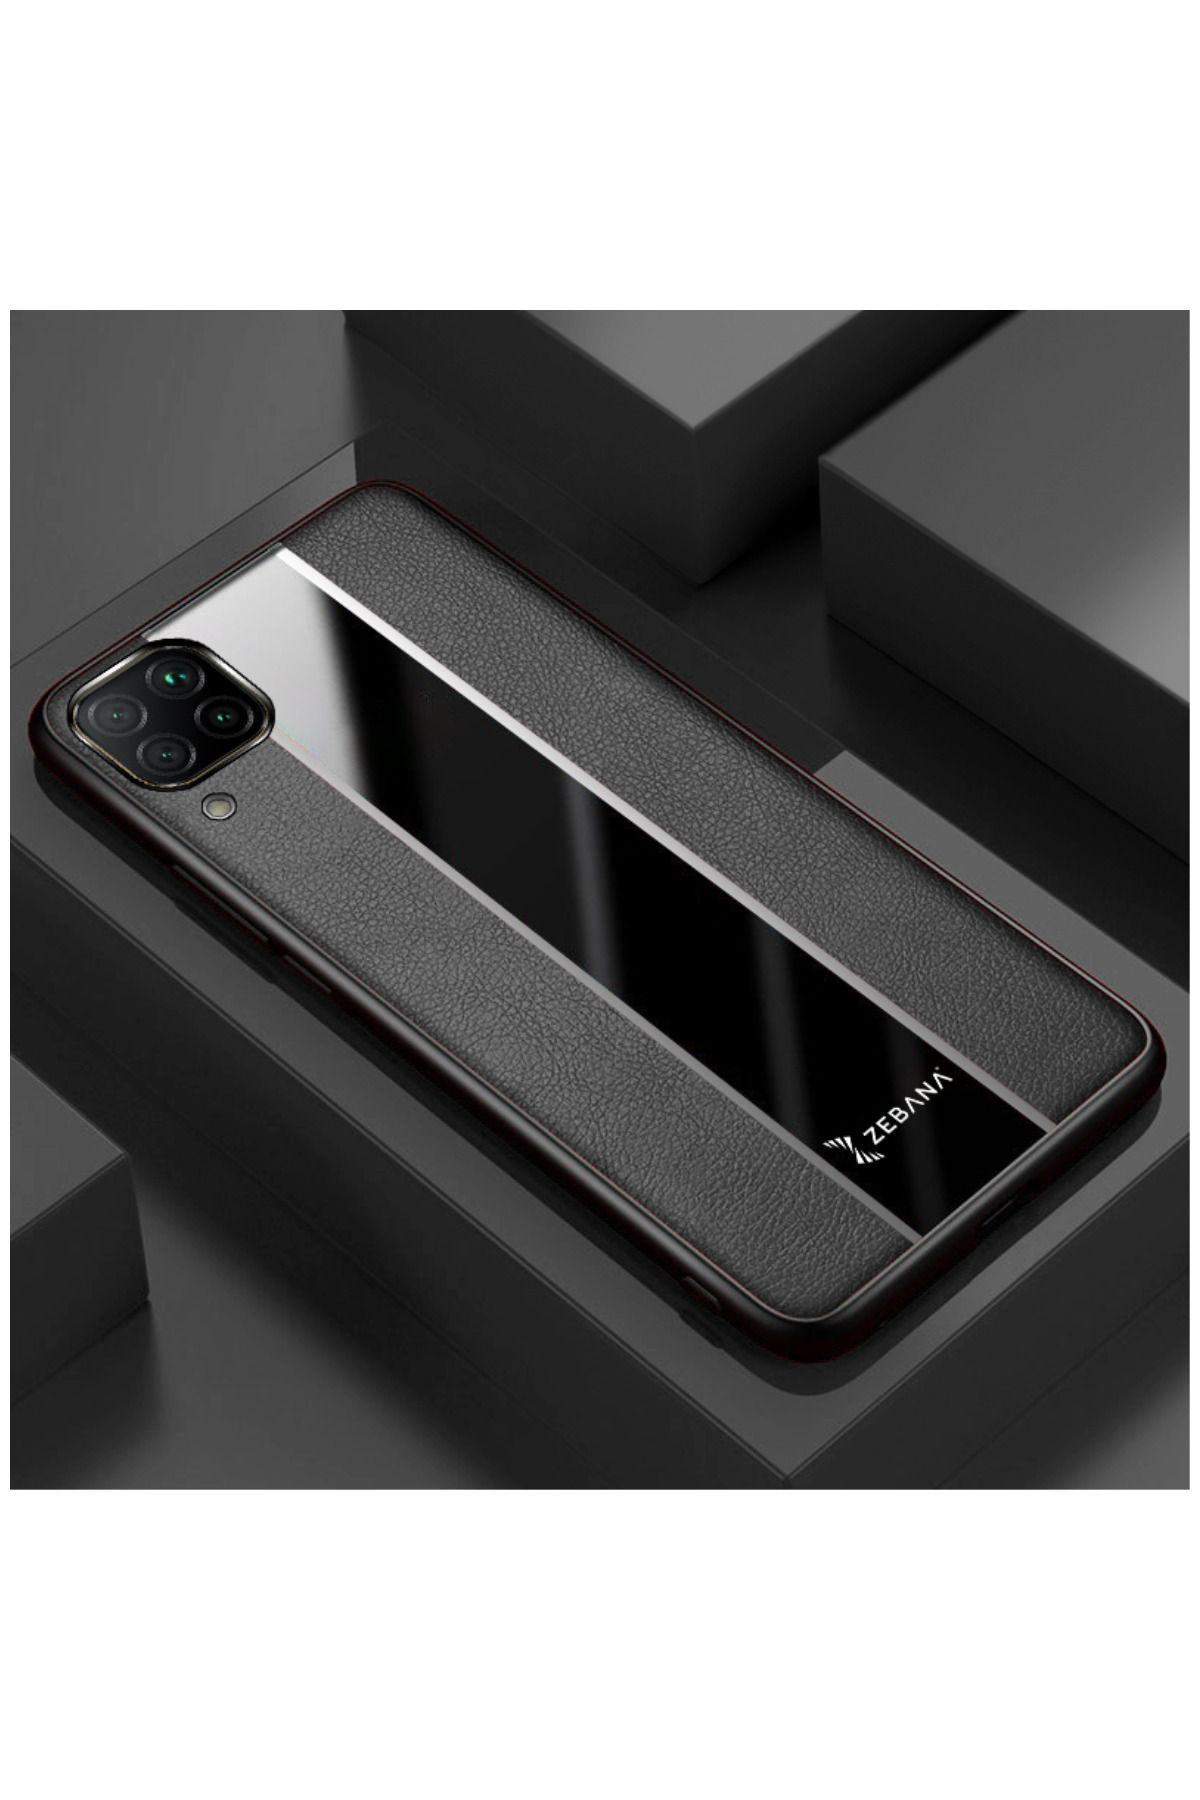 Dara Aksesuar Huawei P40 Lite Uyumlu Kılıf Zebana Premium Deri Kılıf Siyah